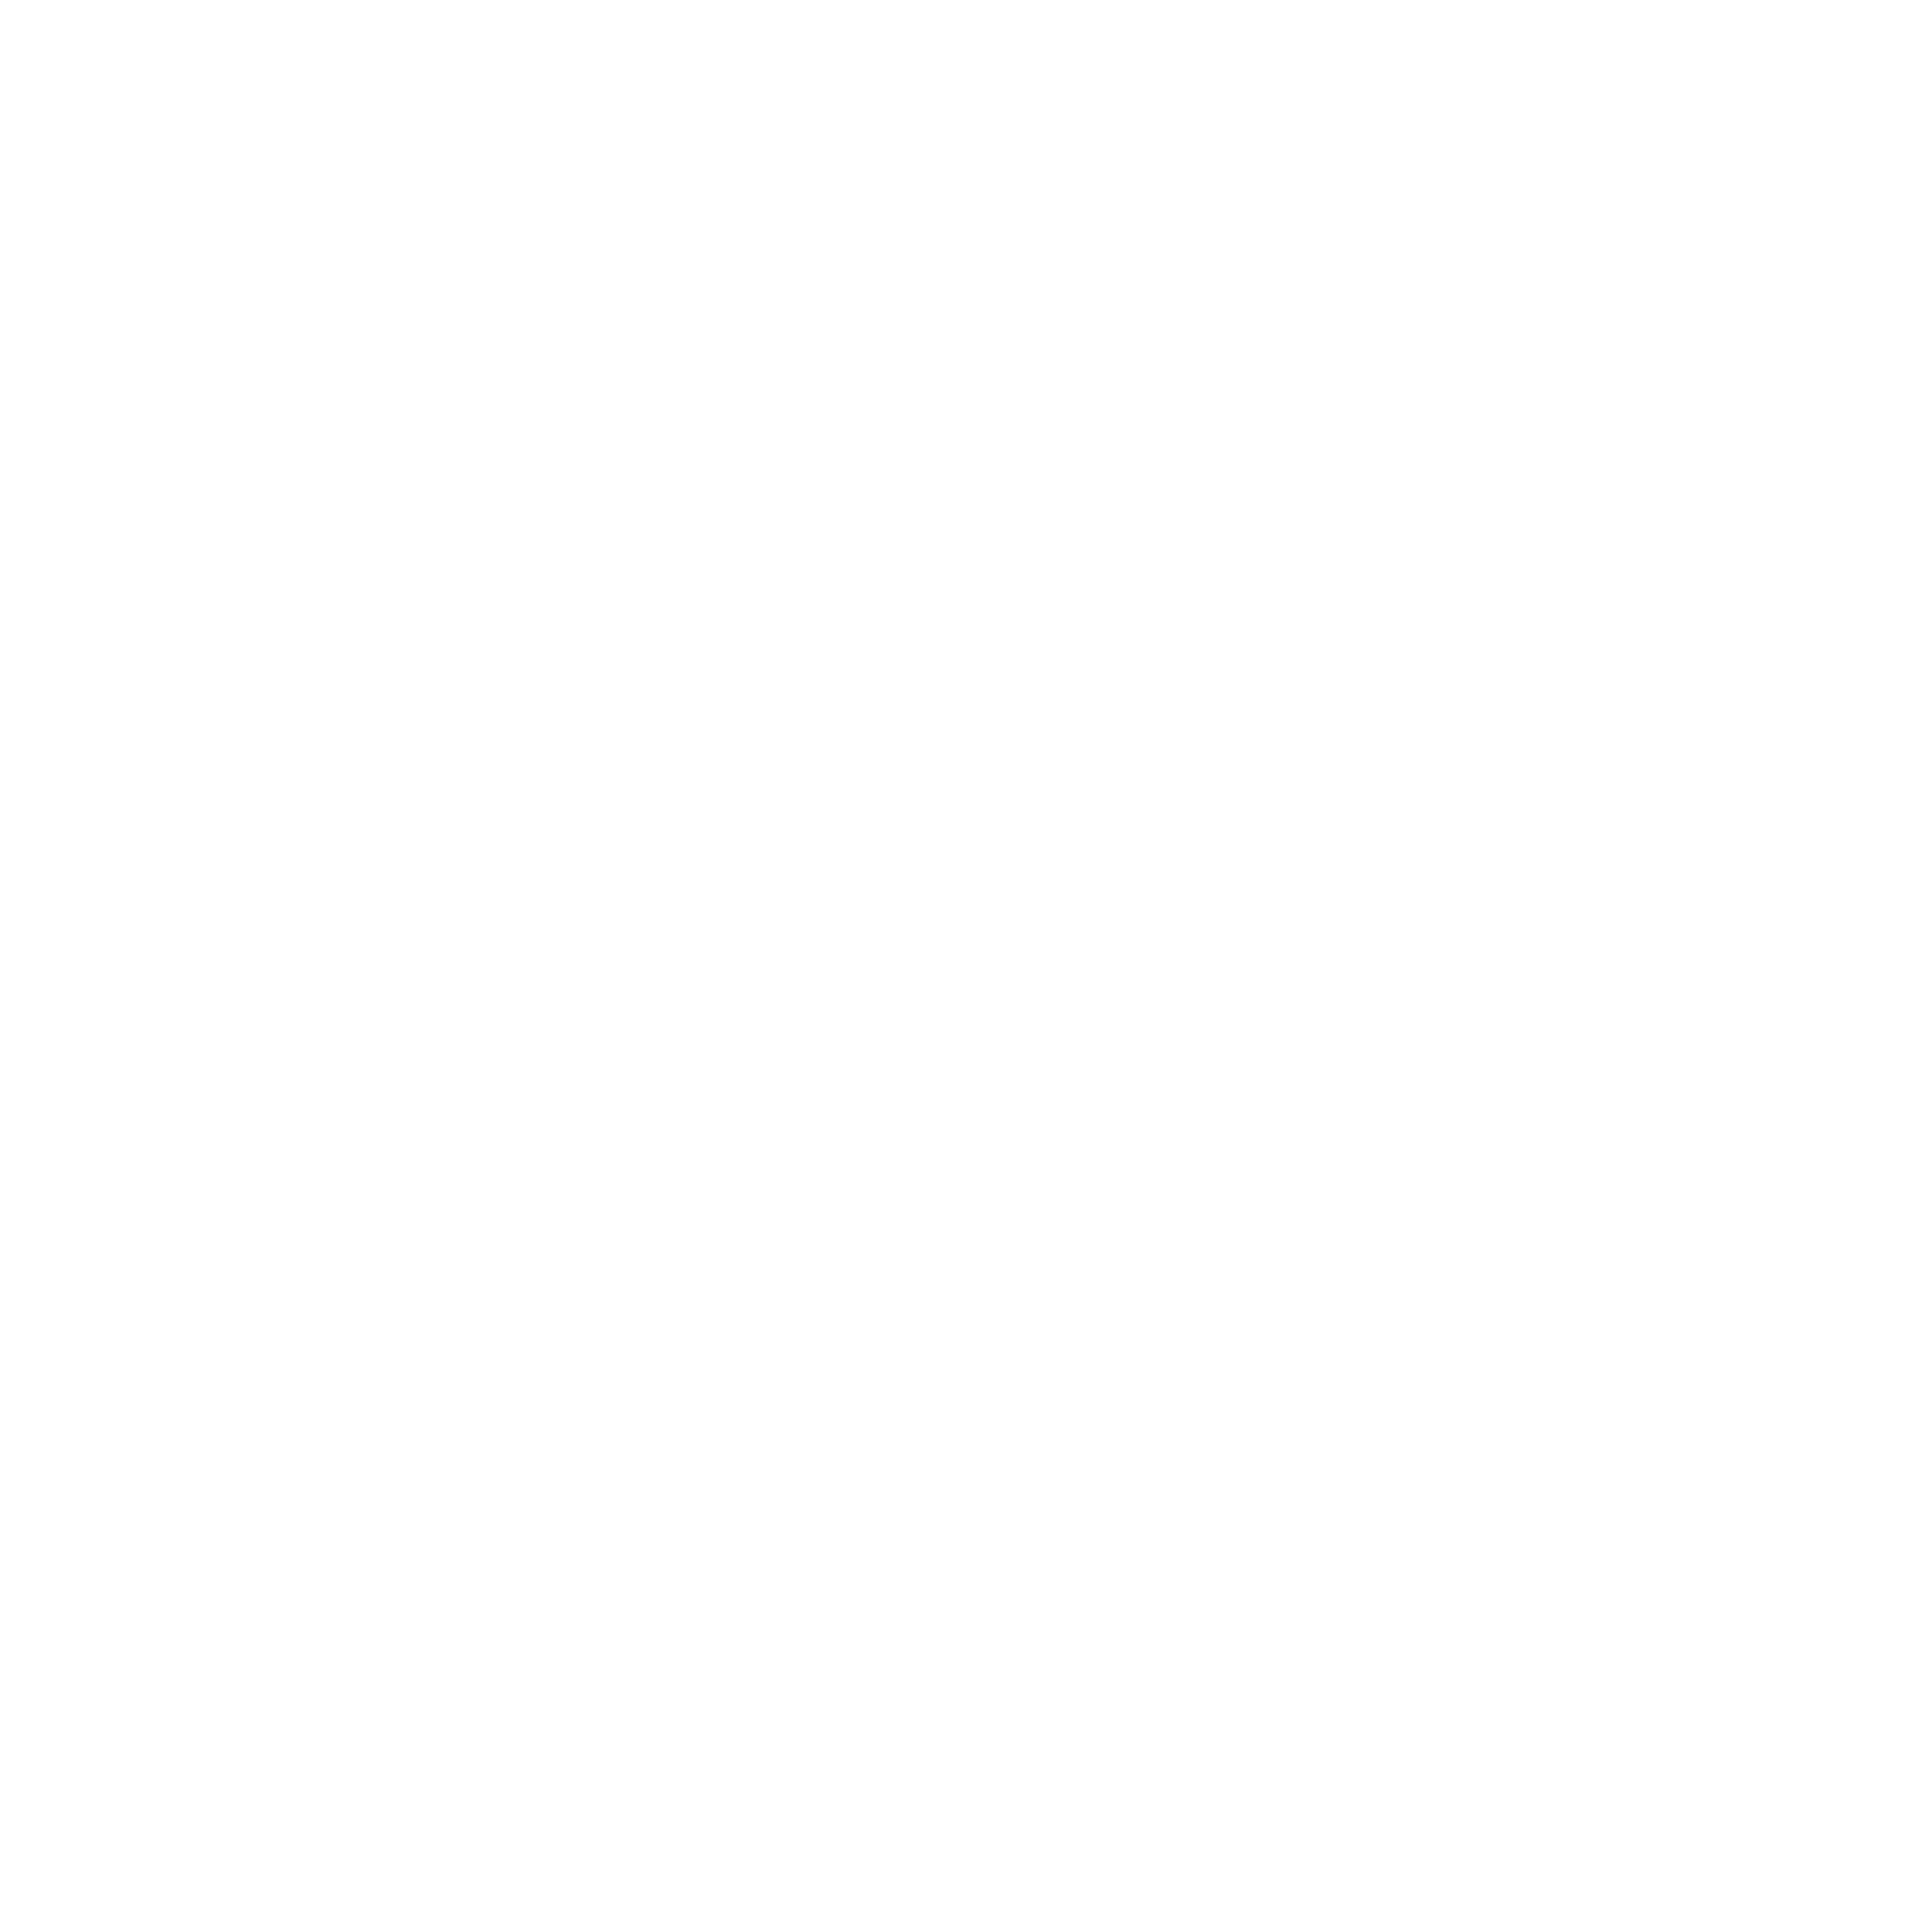 https://rewize.com/public/assets/img/rewize-logo-footer.png